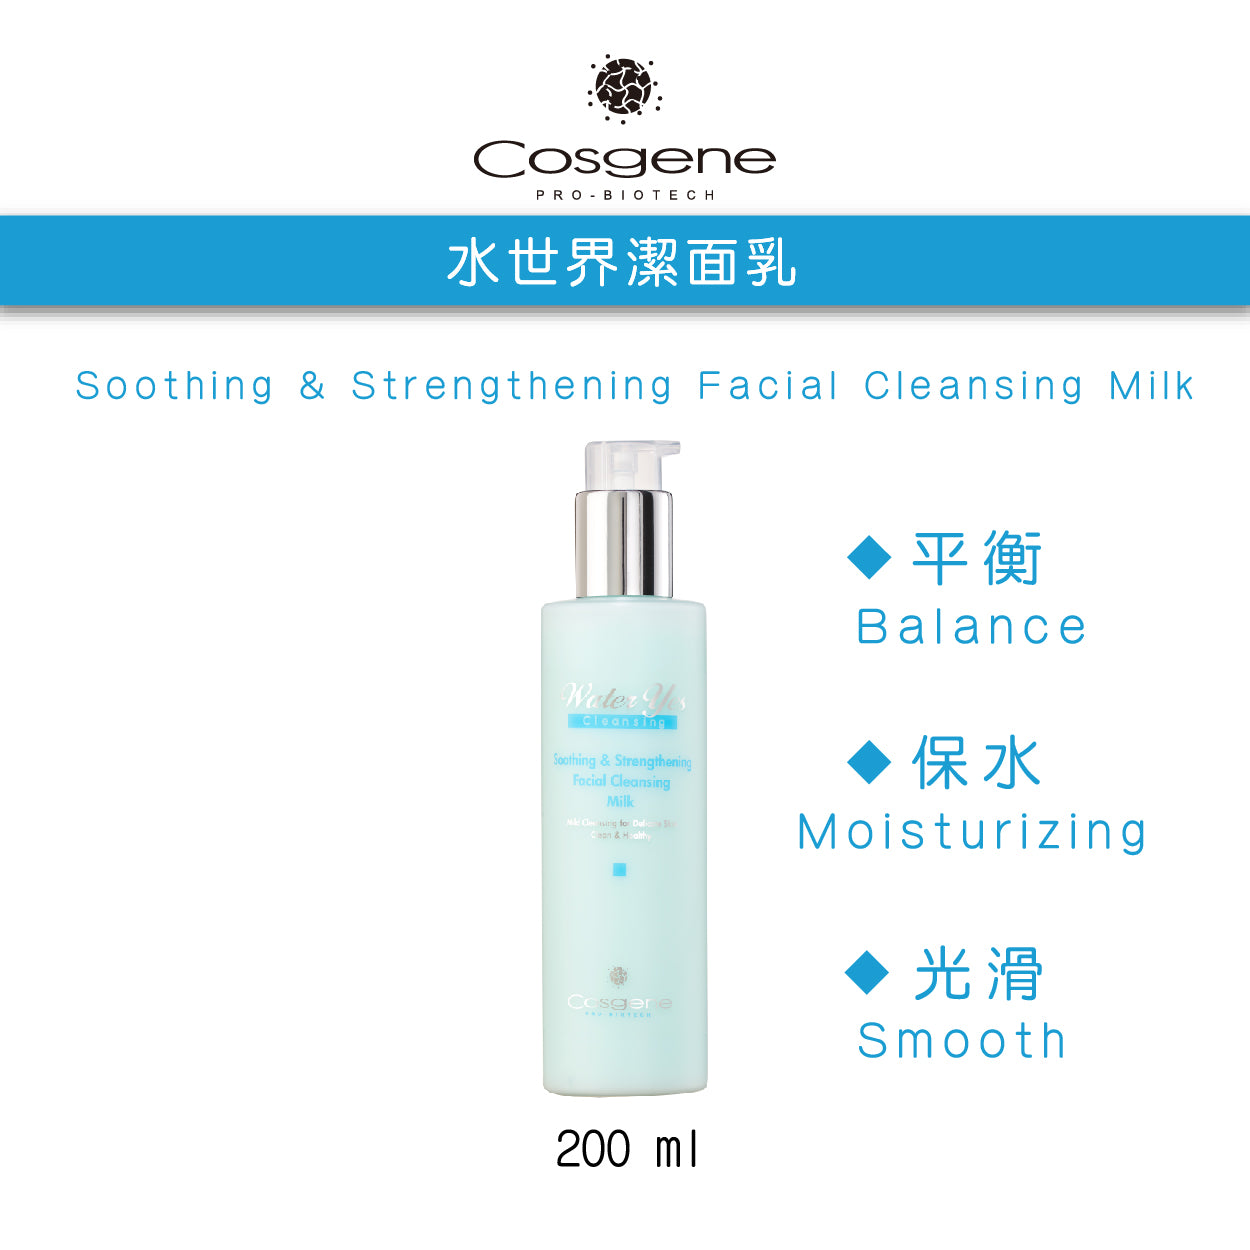 【COSGENE】Soothing & Strengthening Facial Cleansing Milk